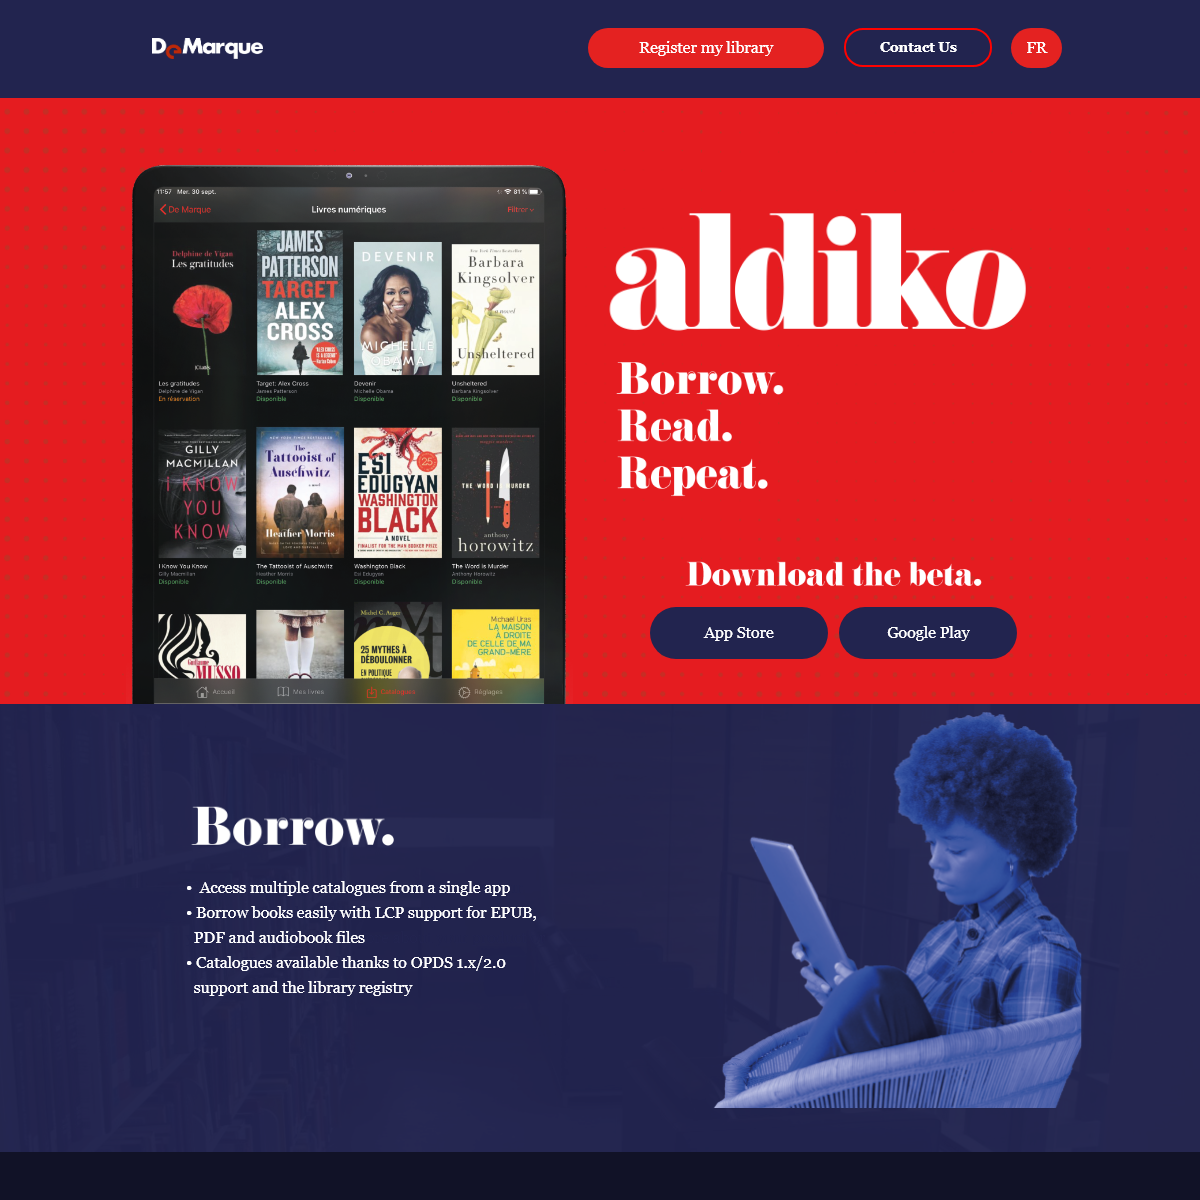 A complete backup of aldiko.com